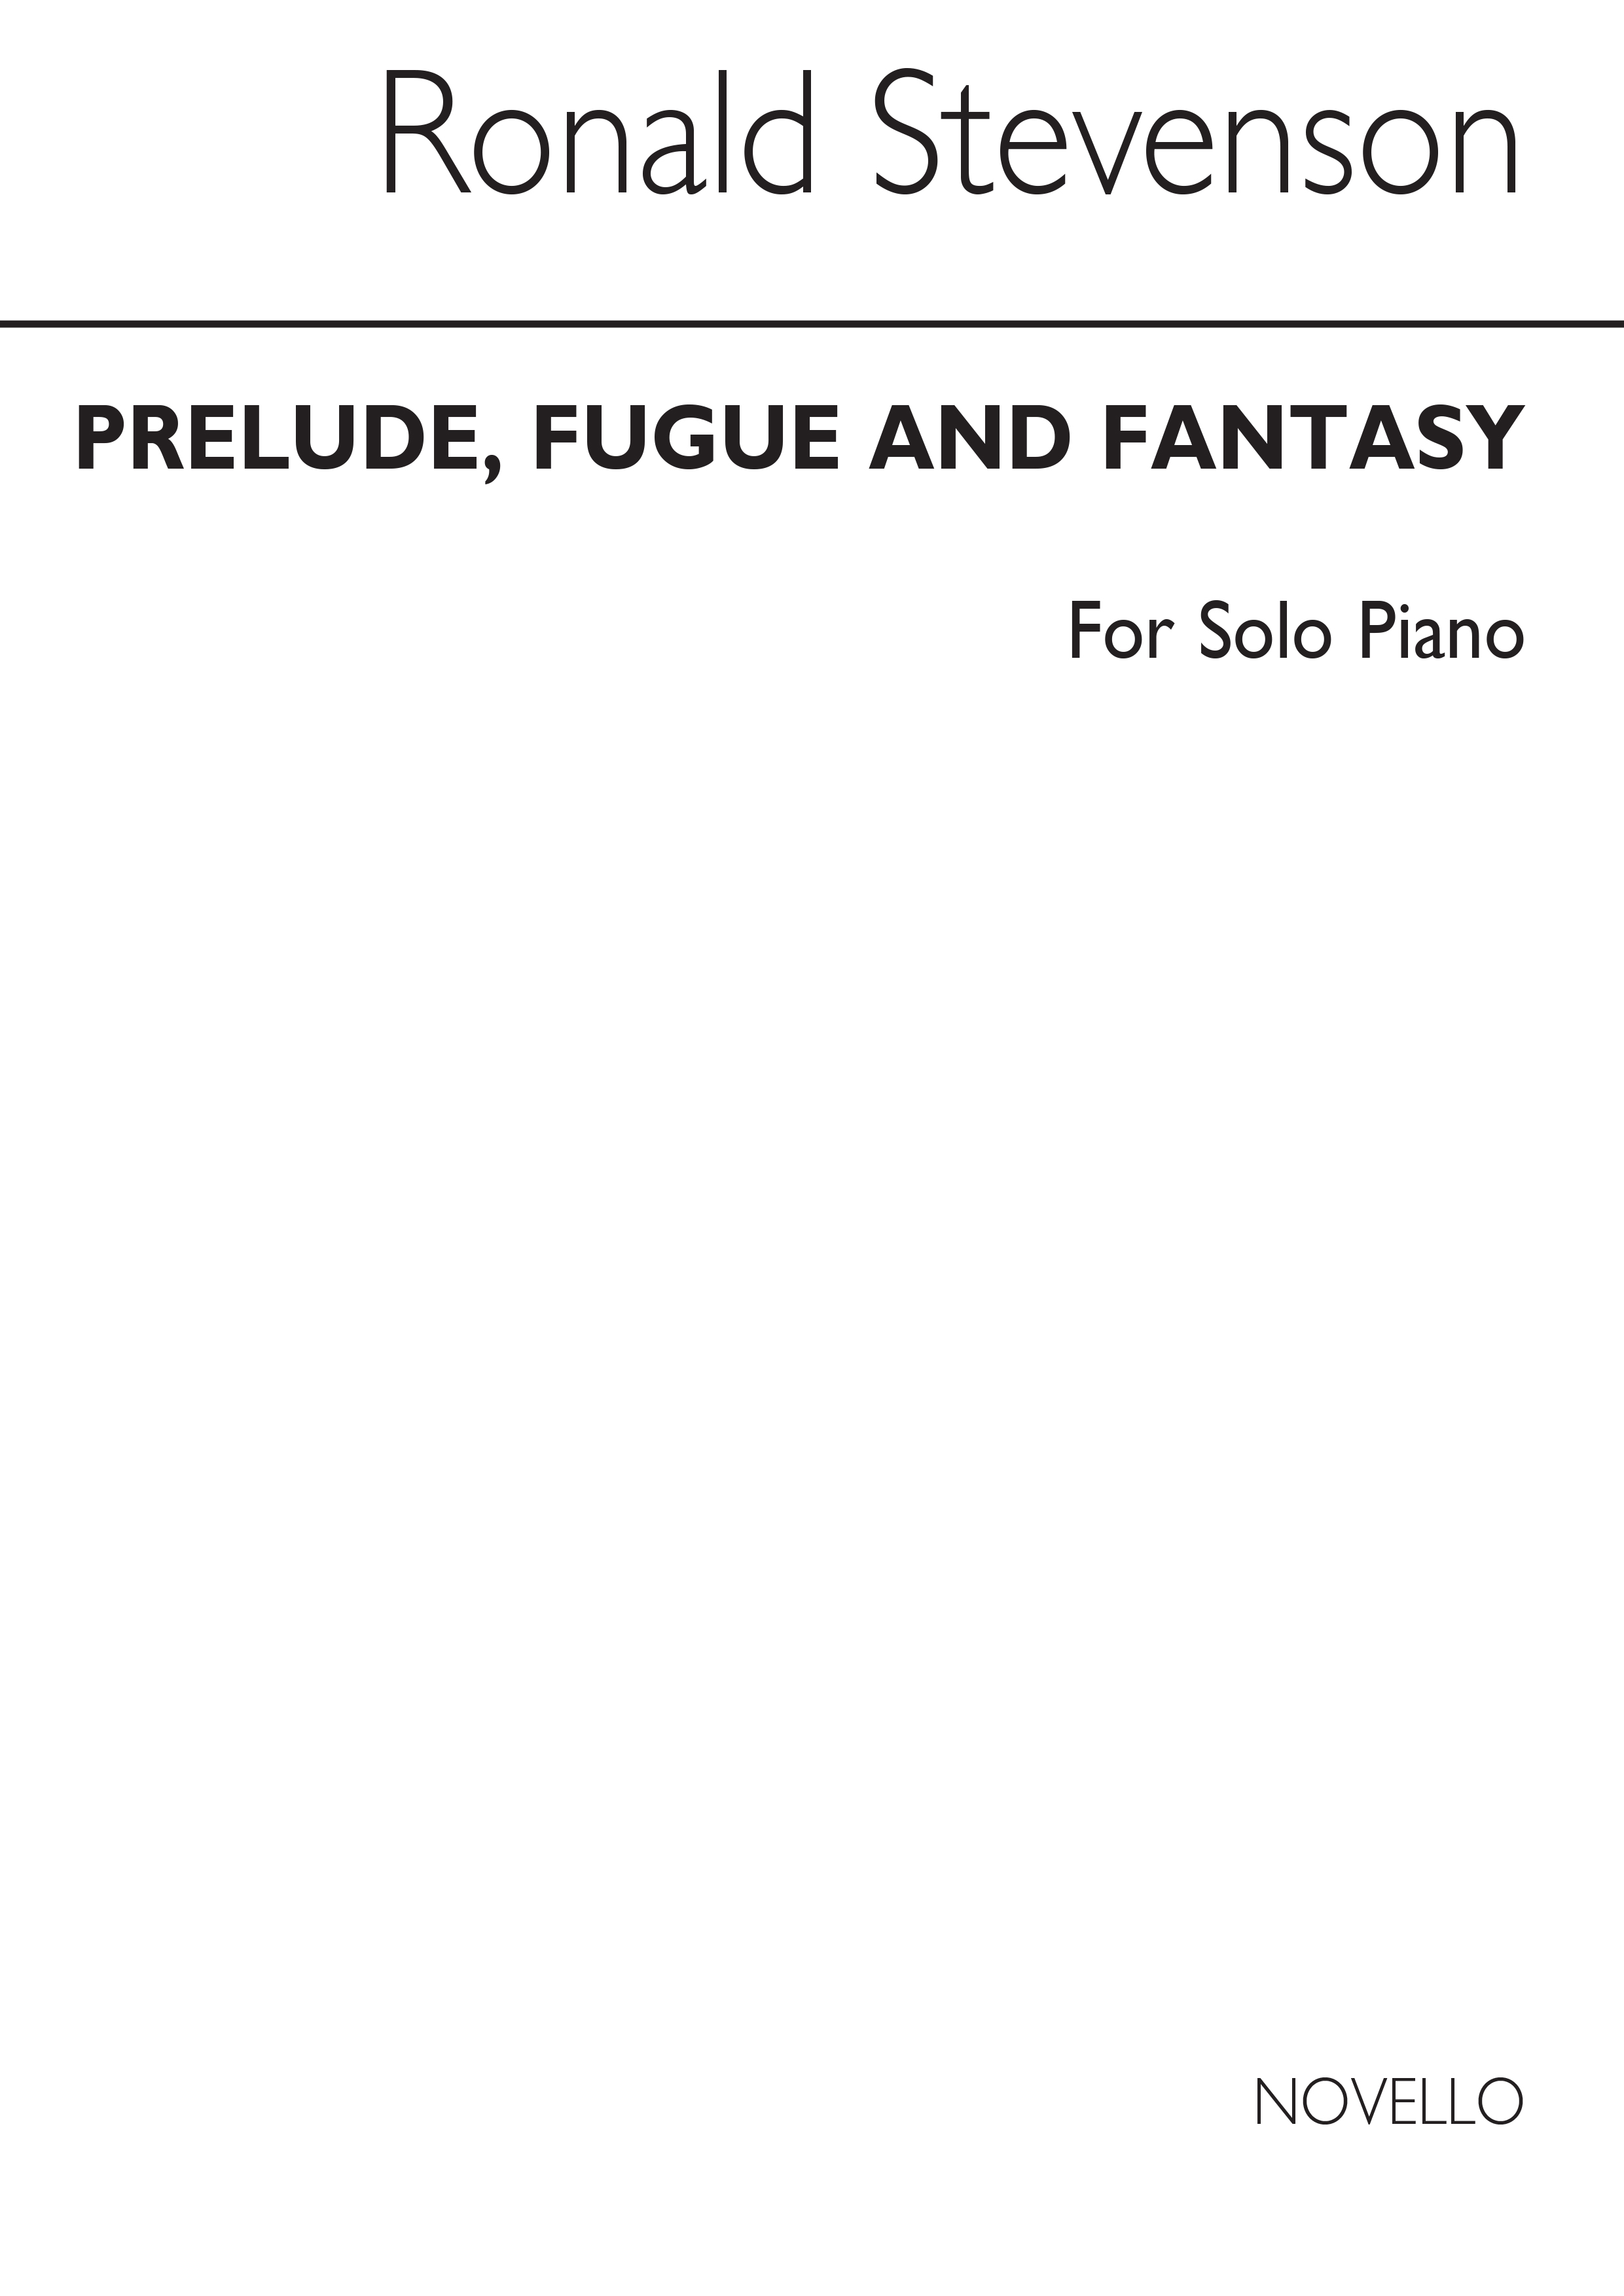 Ronald Stevenson: Prelude, Fugue And Fantasy On Busoni's Faust